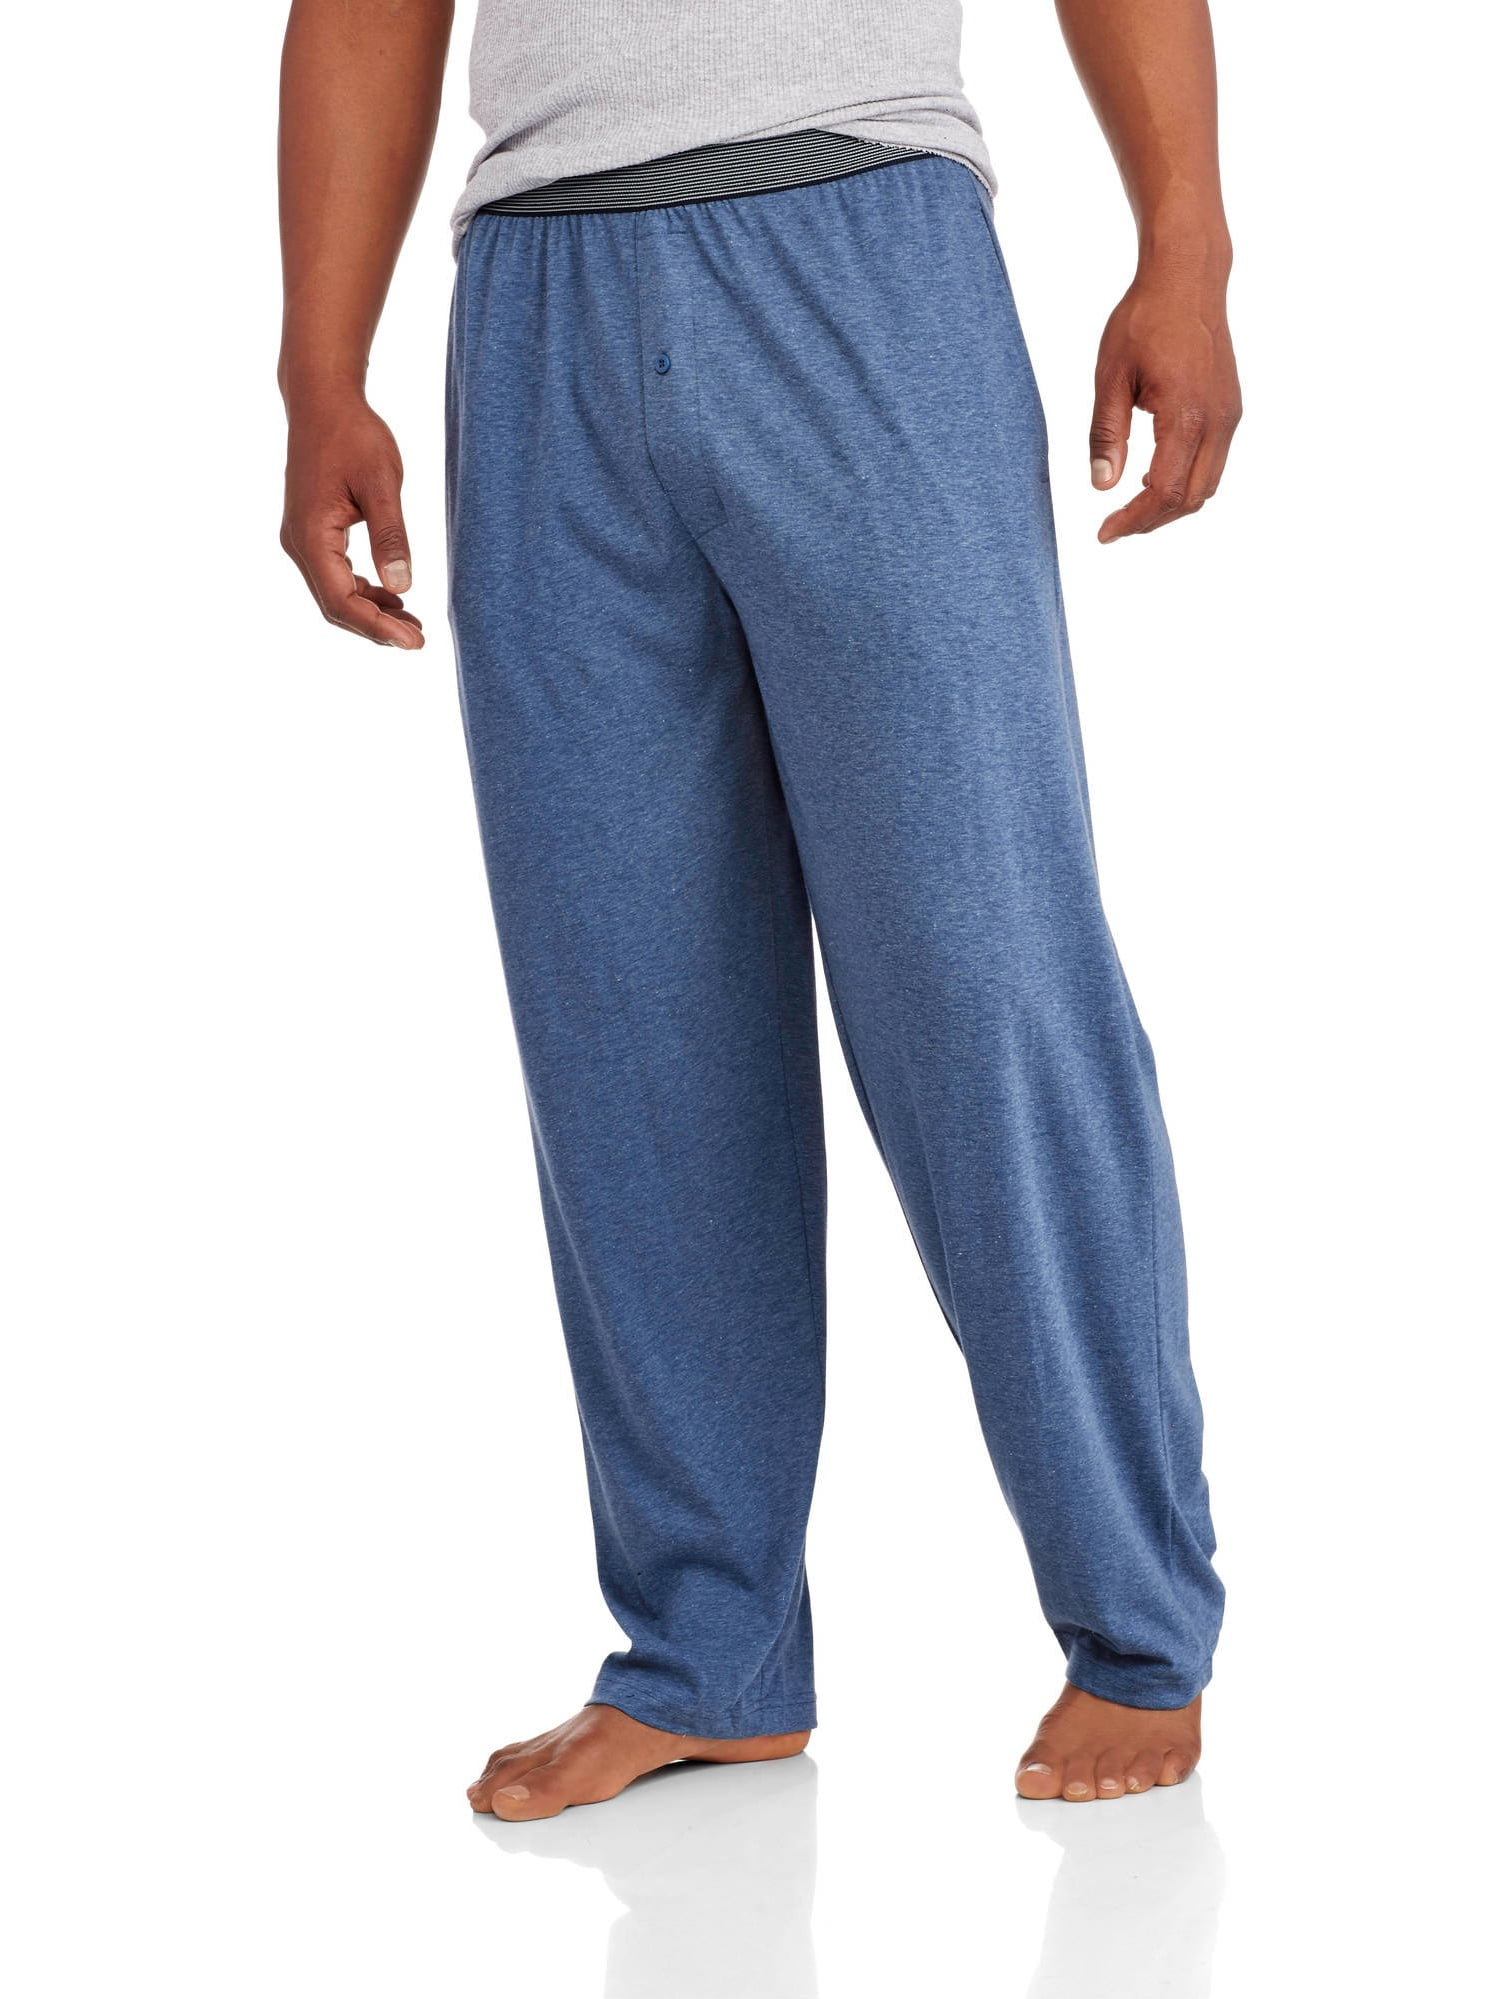 Hanes Big Men's Solid Knit Pant With Exposed Stripe Elastic - Walmart.com